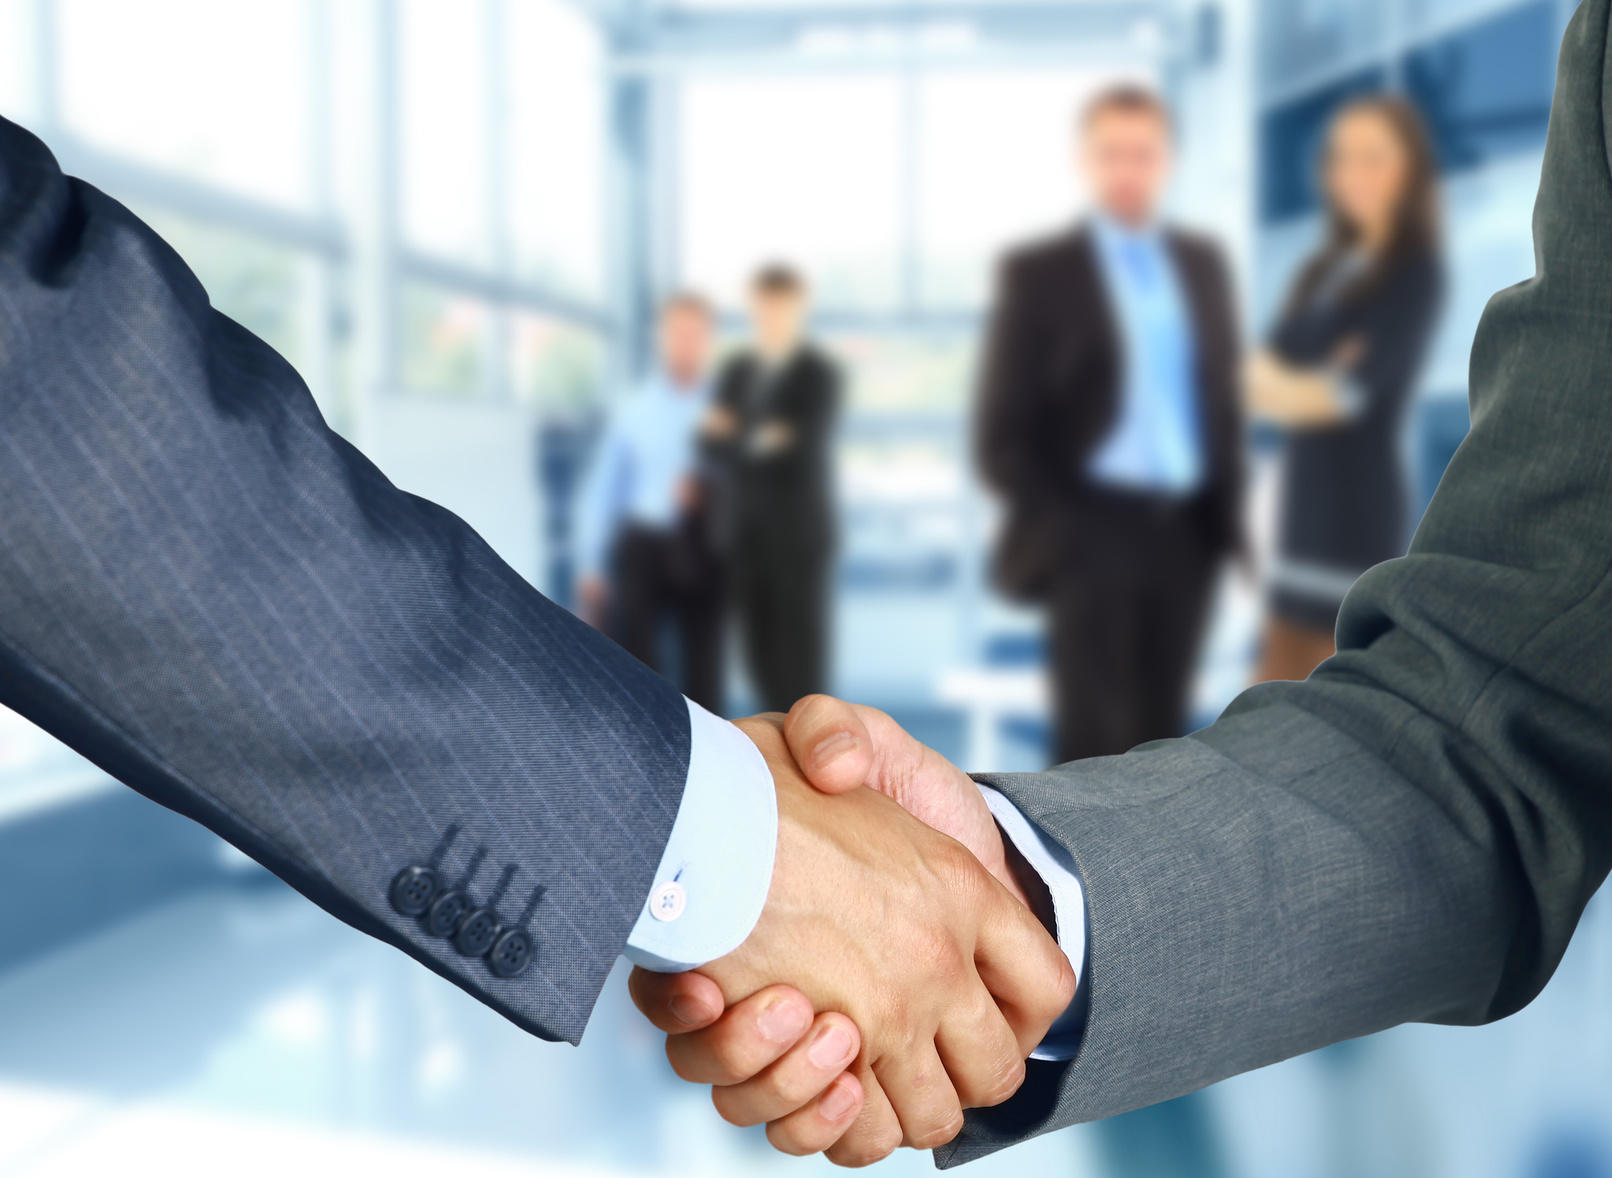 Website Design business associates shaking hands in office